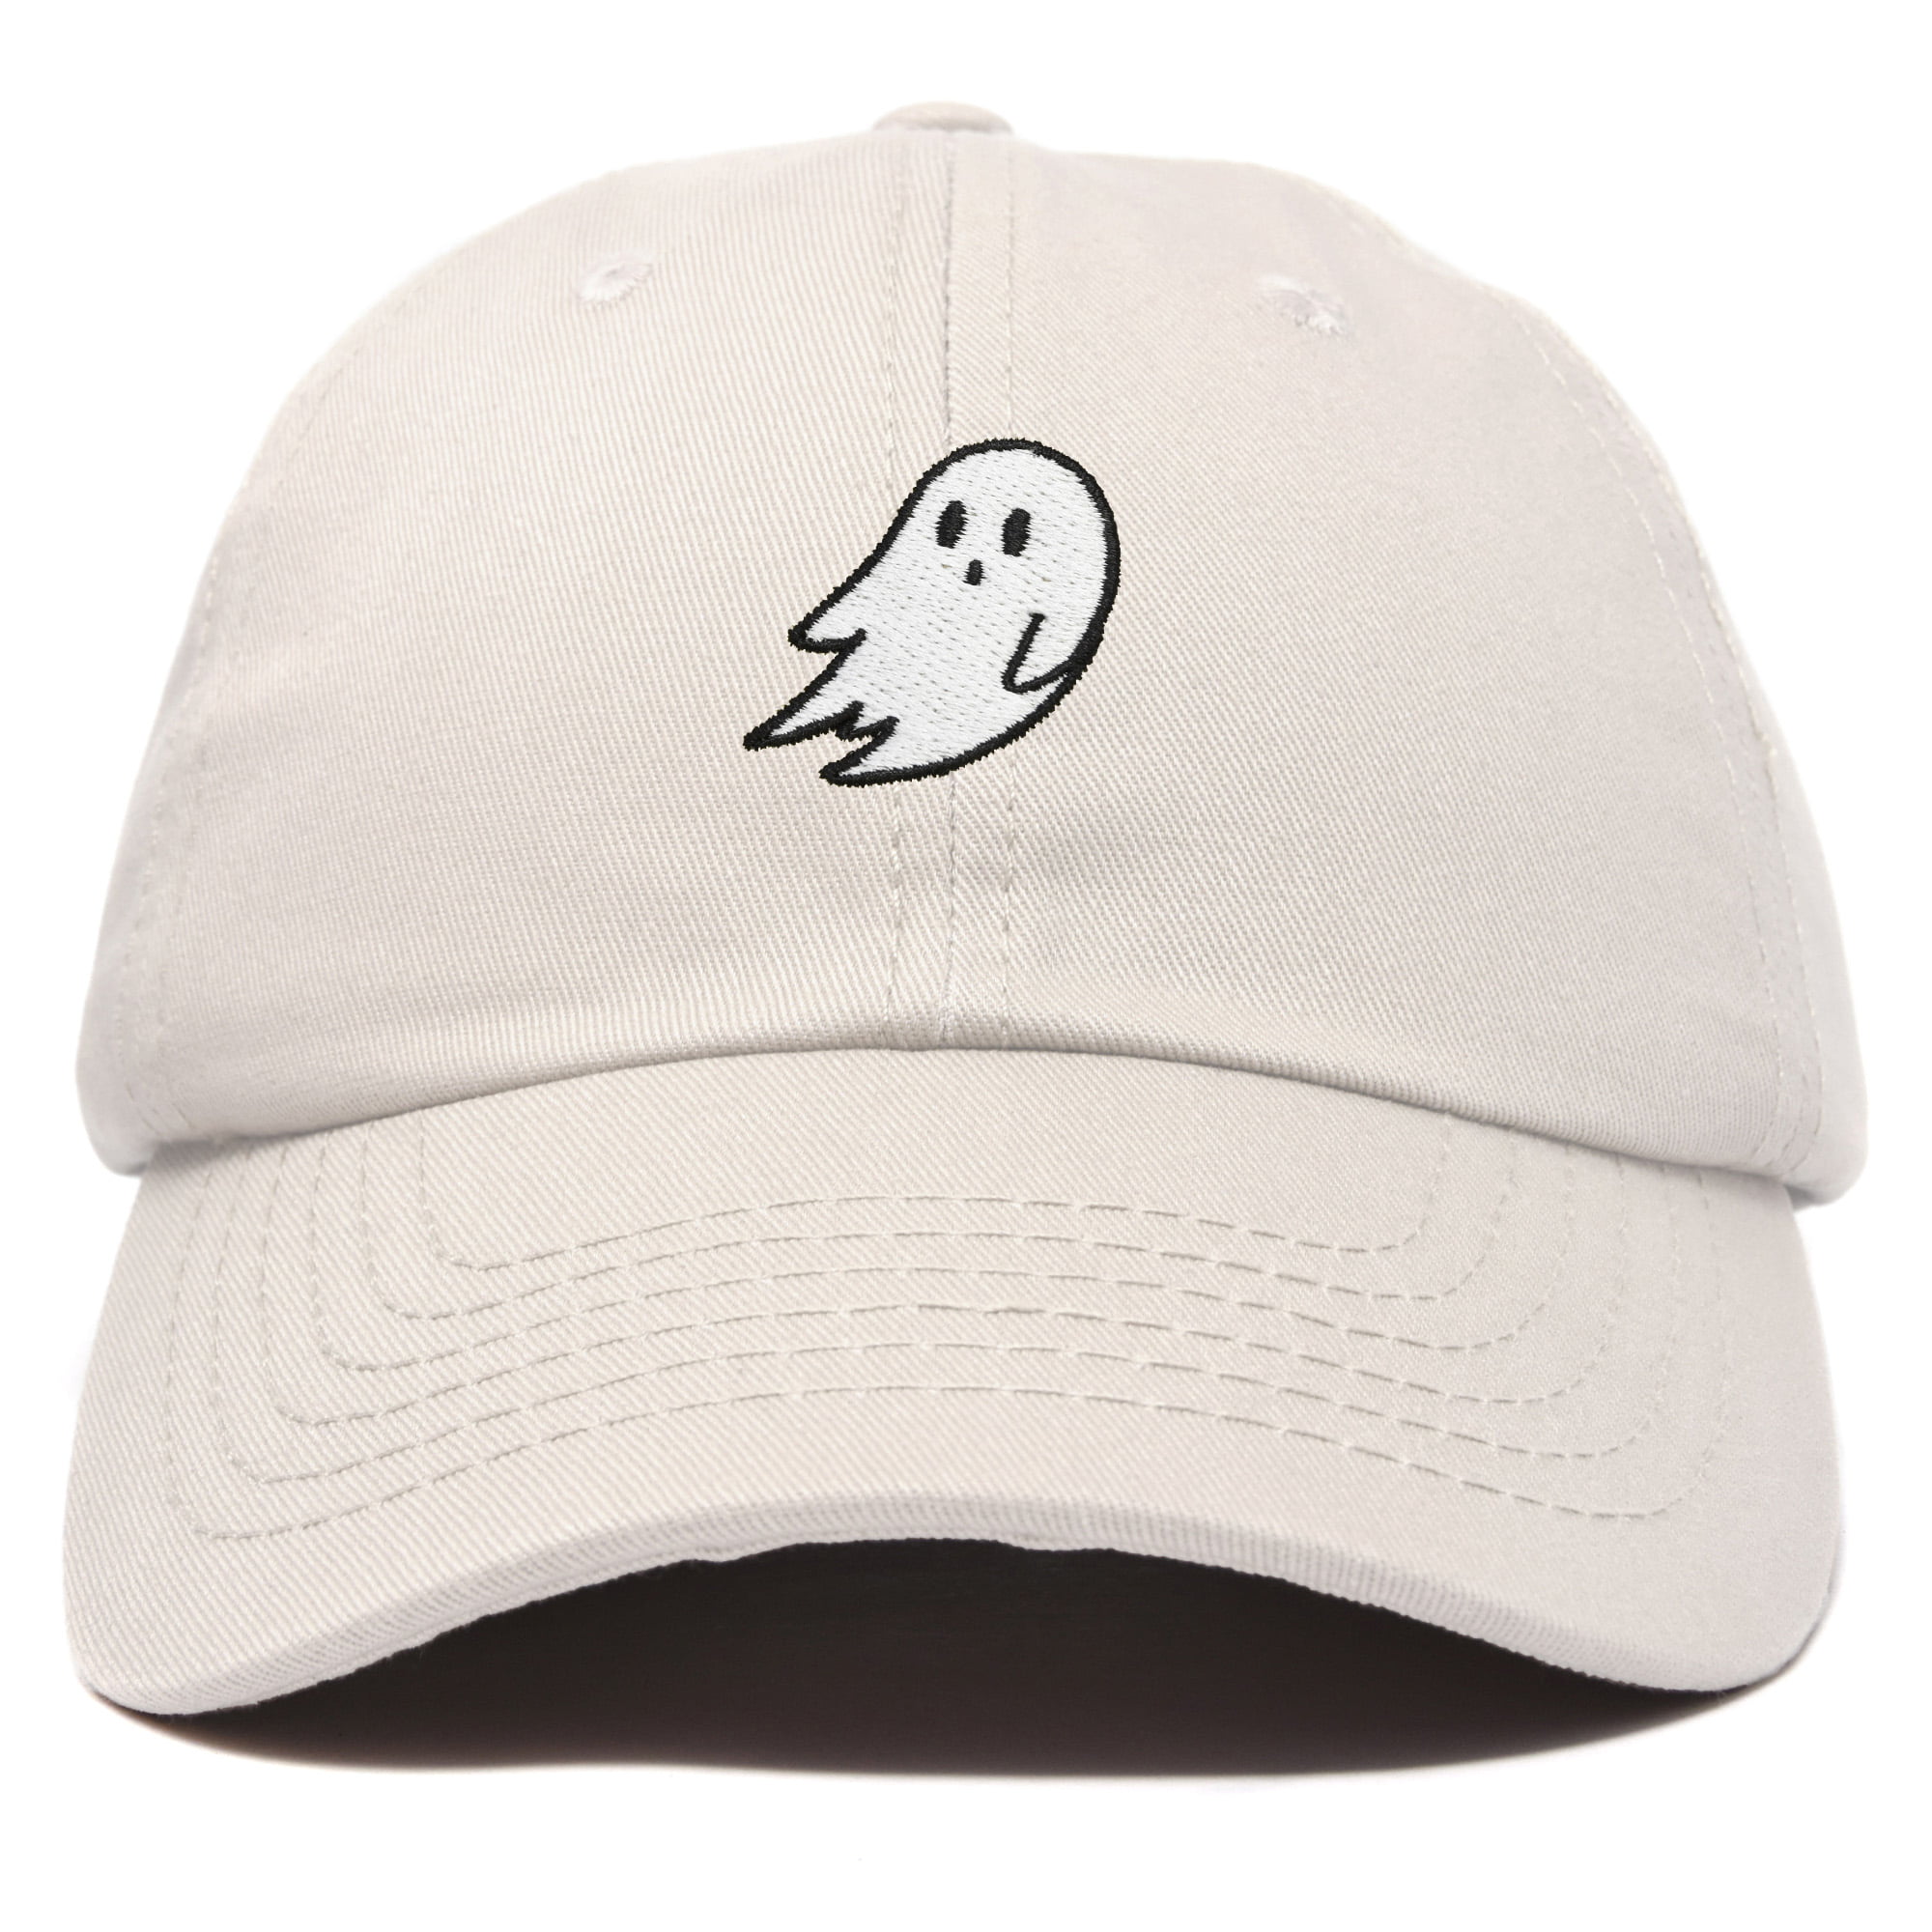 Ghost Bc Adult Sandwich Hat Baseball Cap Adjustable Athletic Hat 